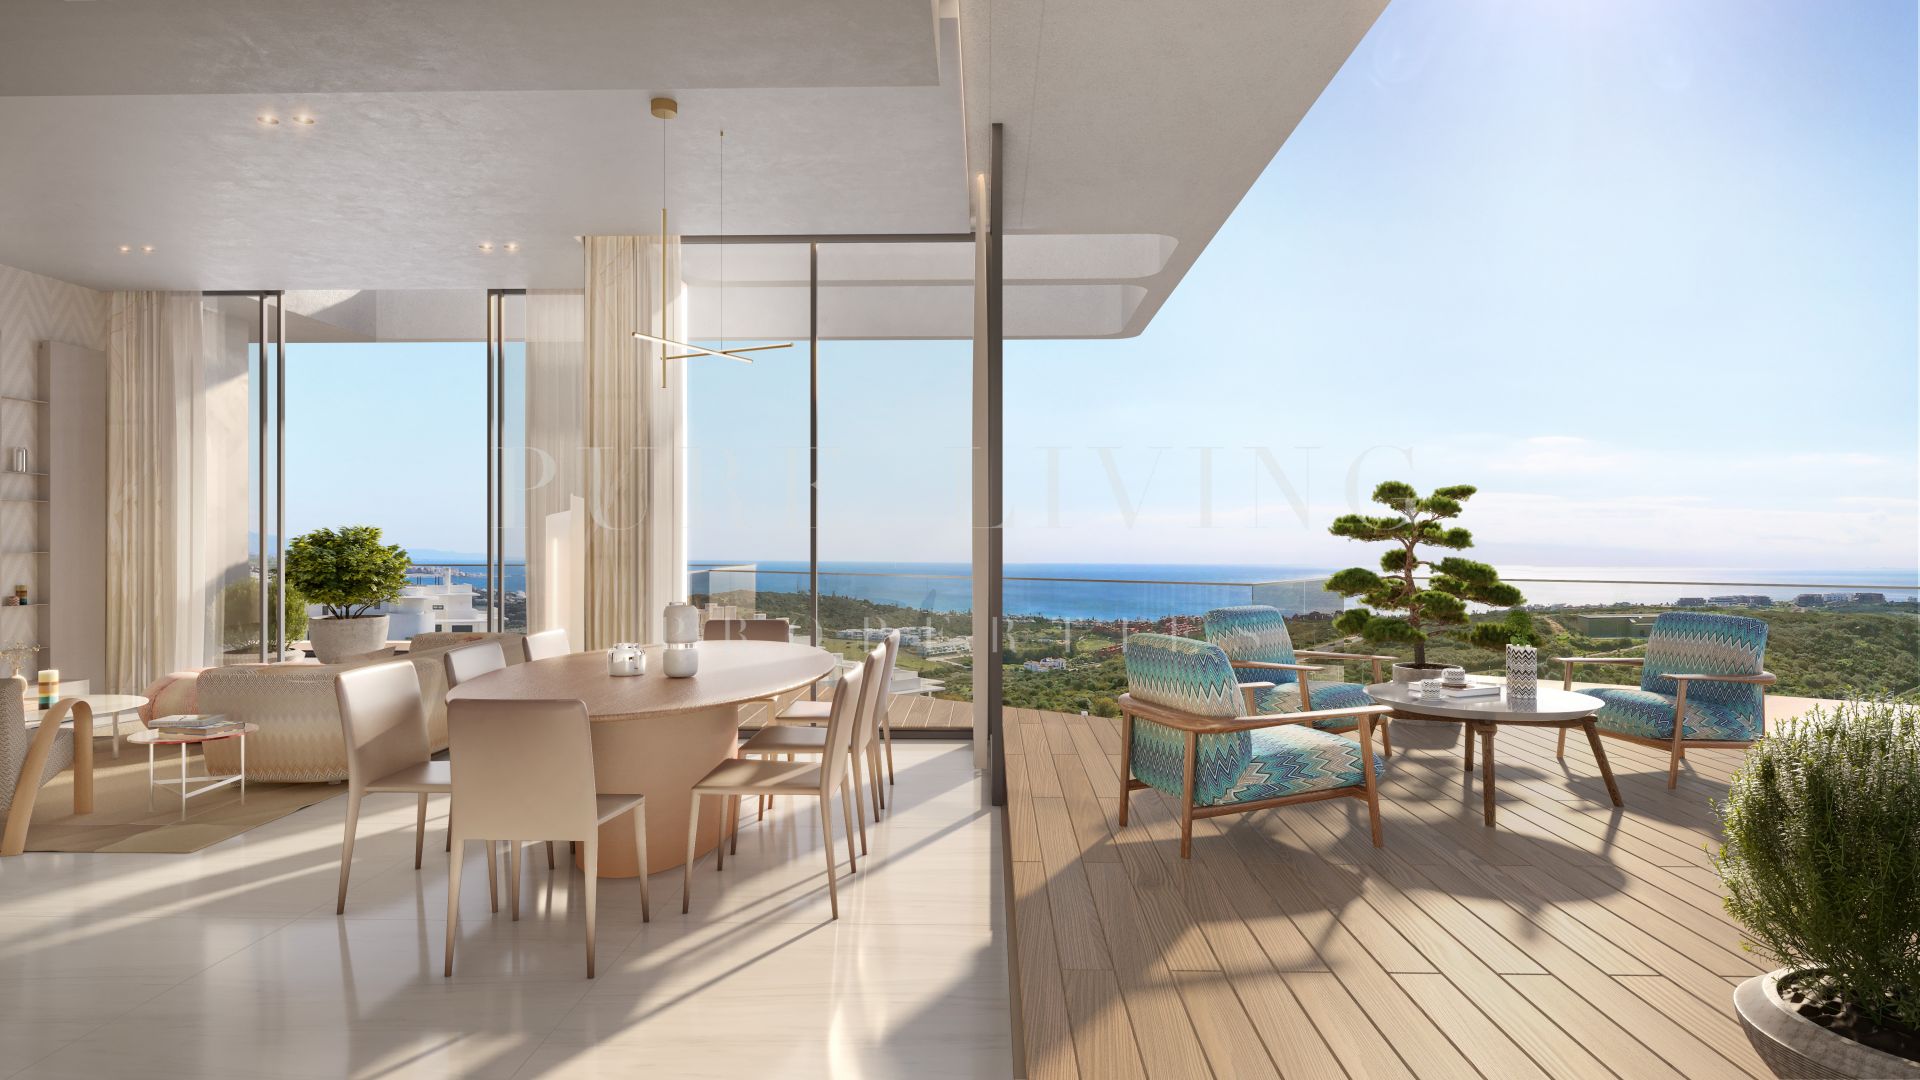 Marea, a new development residing in the pristine embrace of the Finca Cortesin Resort